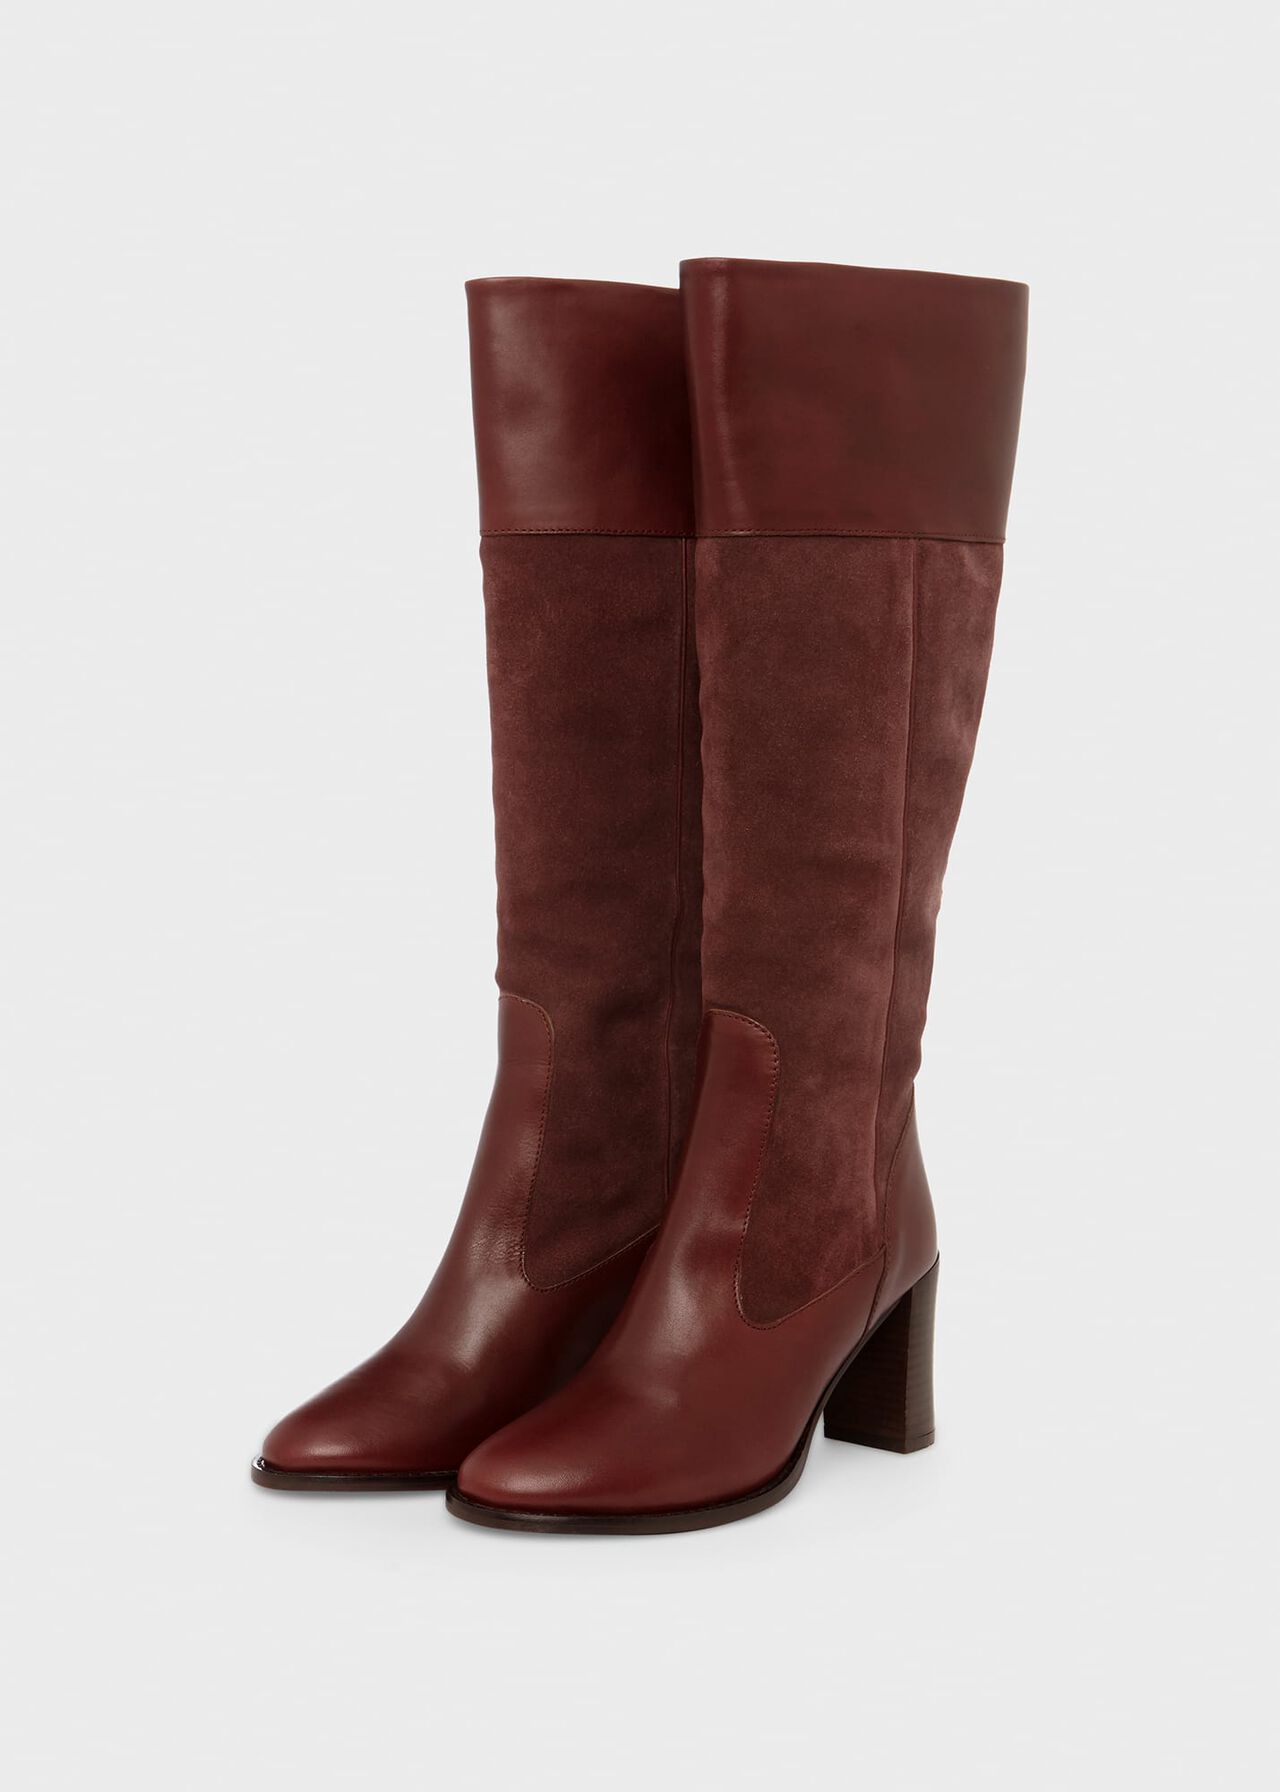 Stephanie Leather Knee Boots, Dark Brown, hi-res